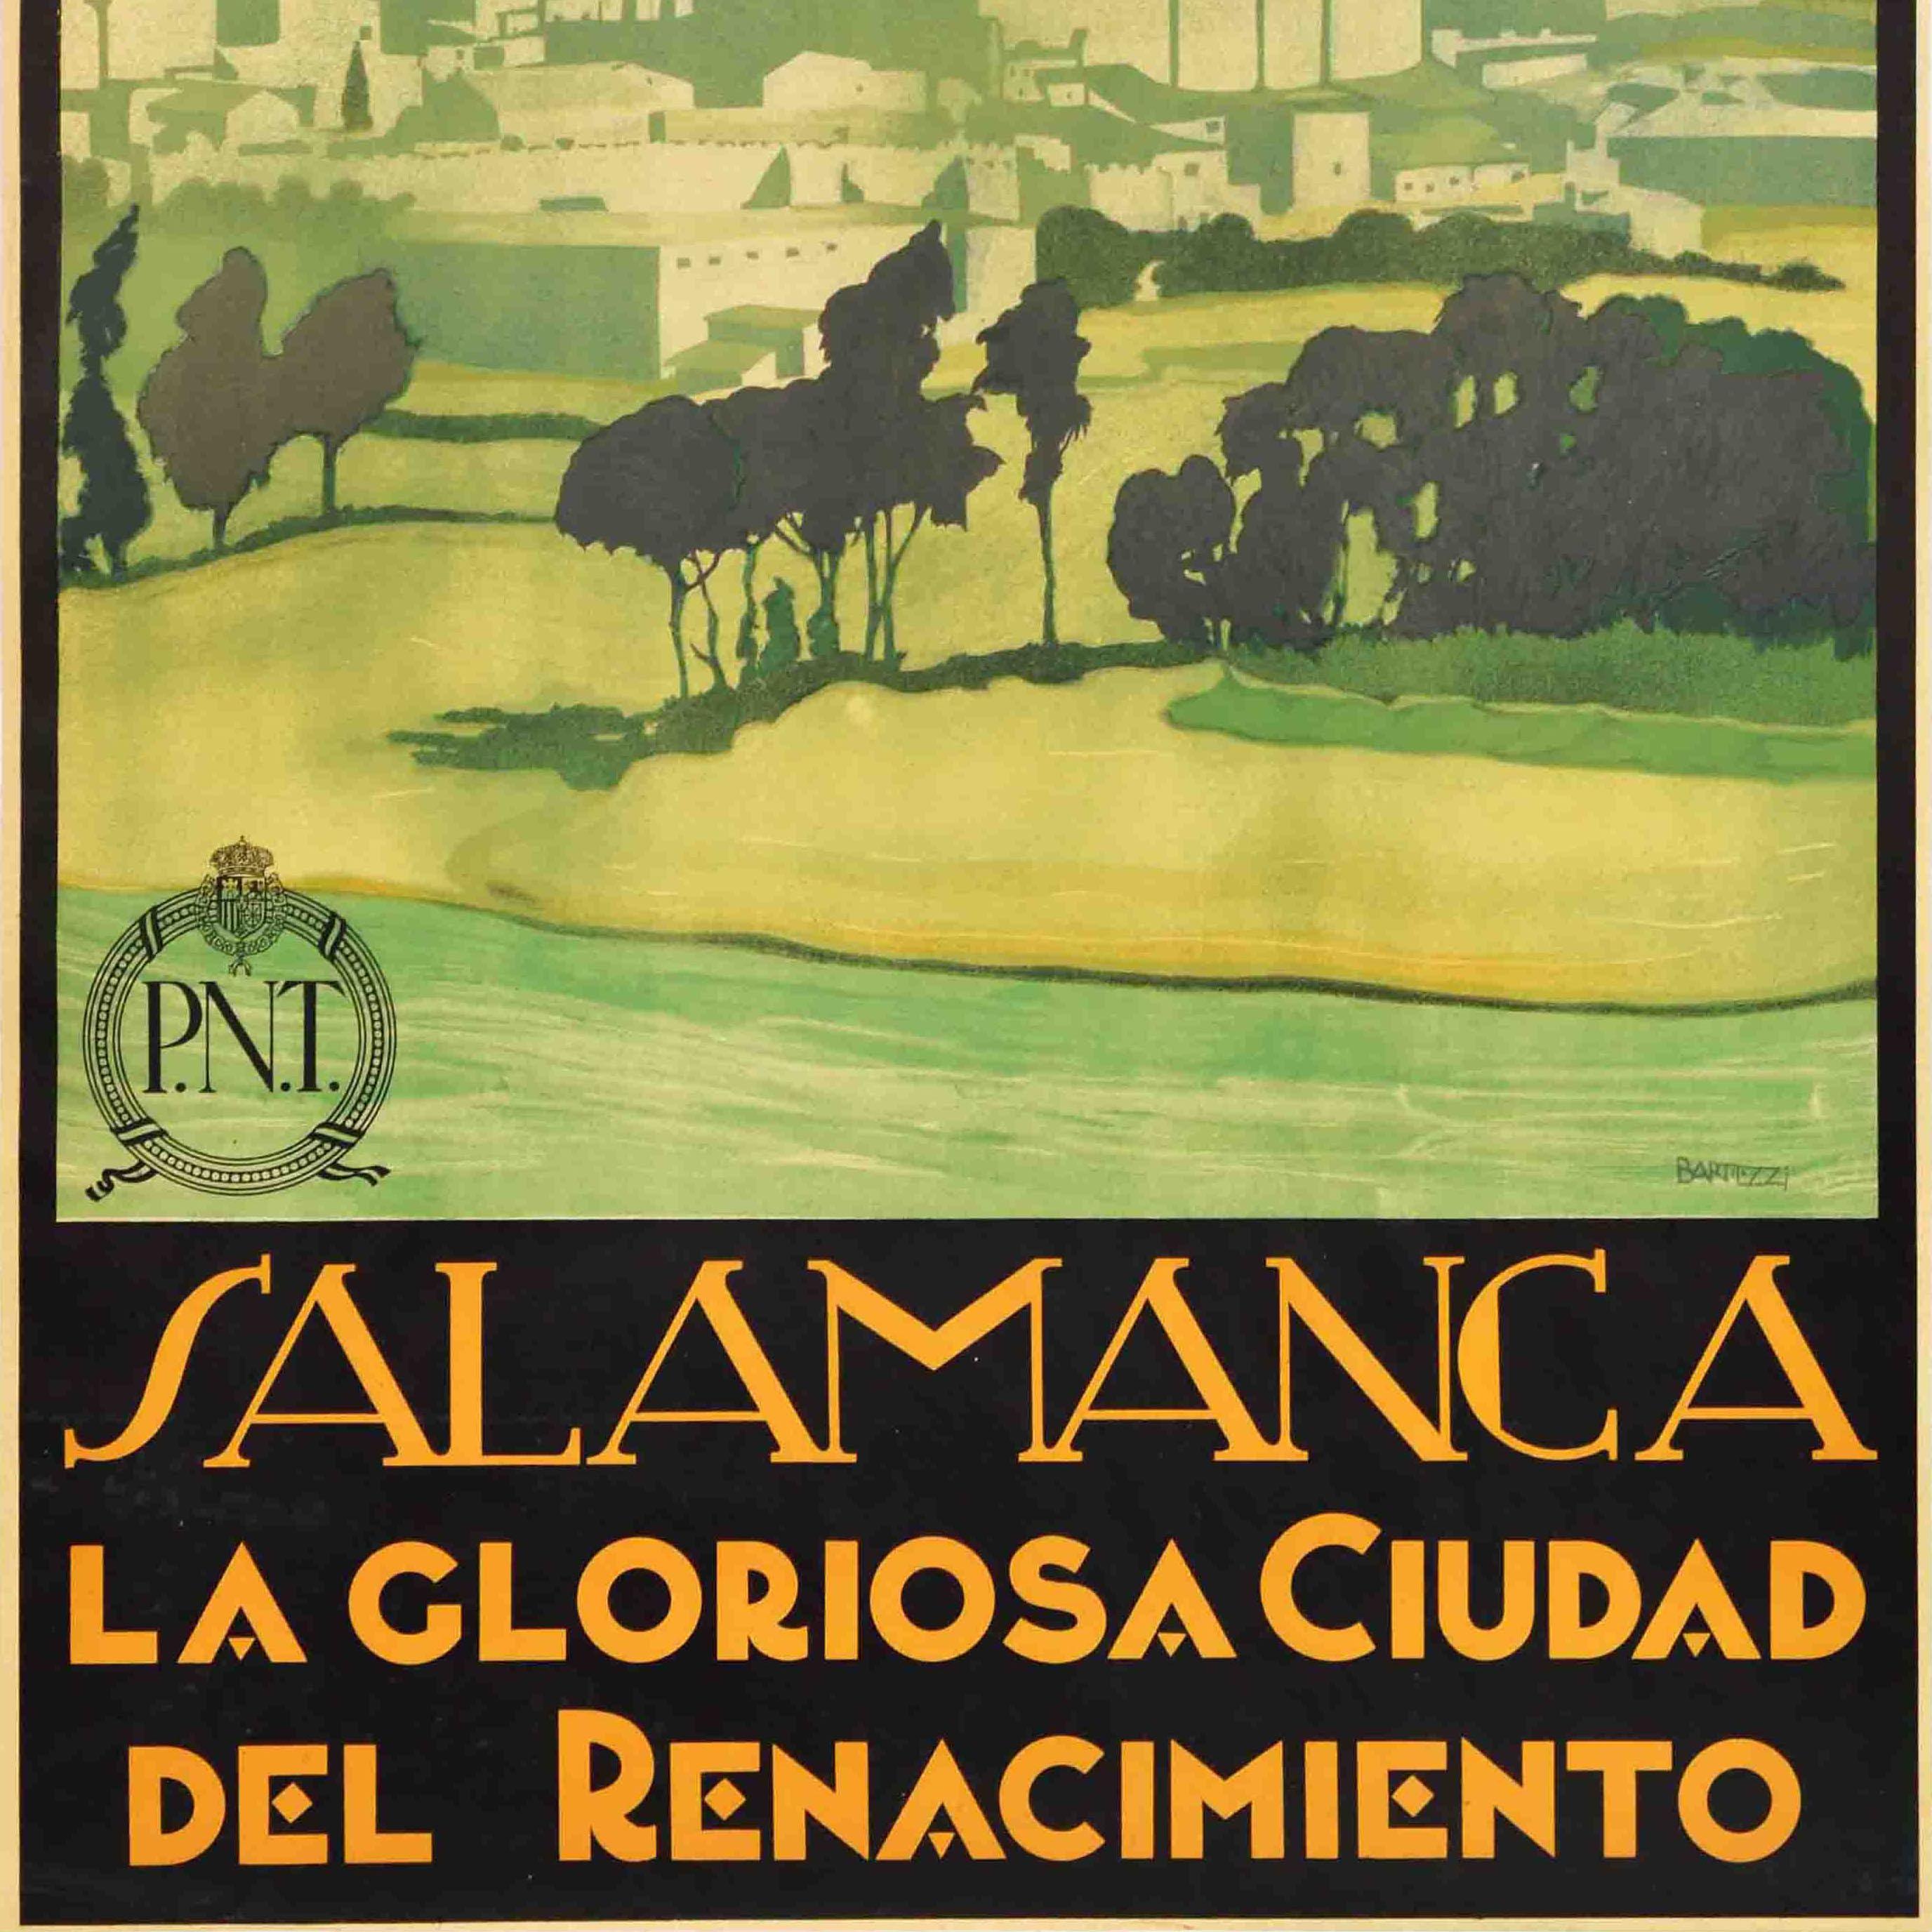 Mid-20th Century Original Vintage Travel Poster Salamanca City Of Renaissance PNT Spain Cathedral